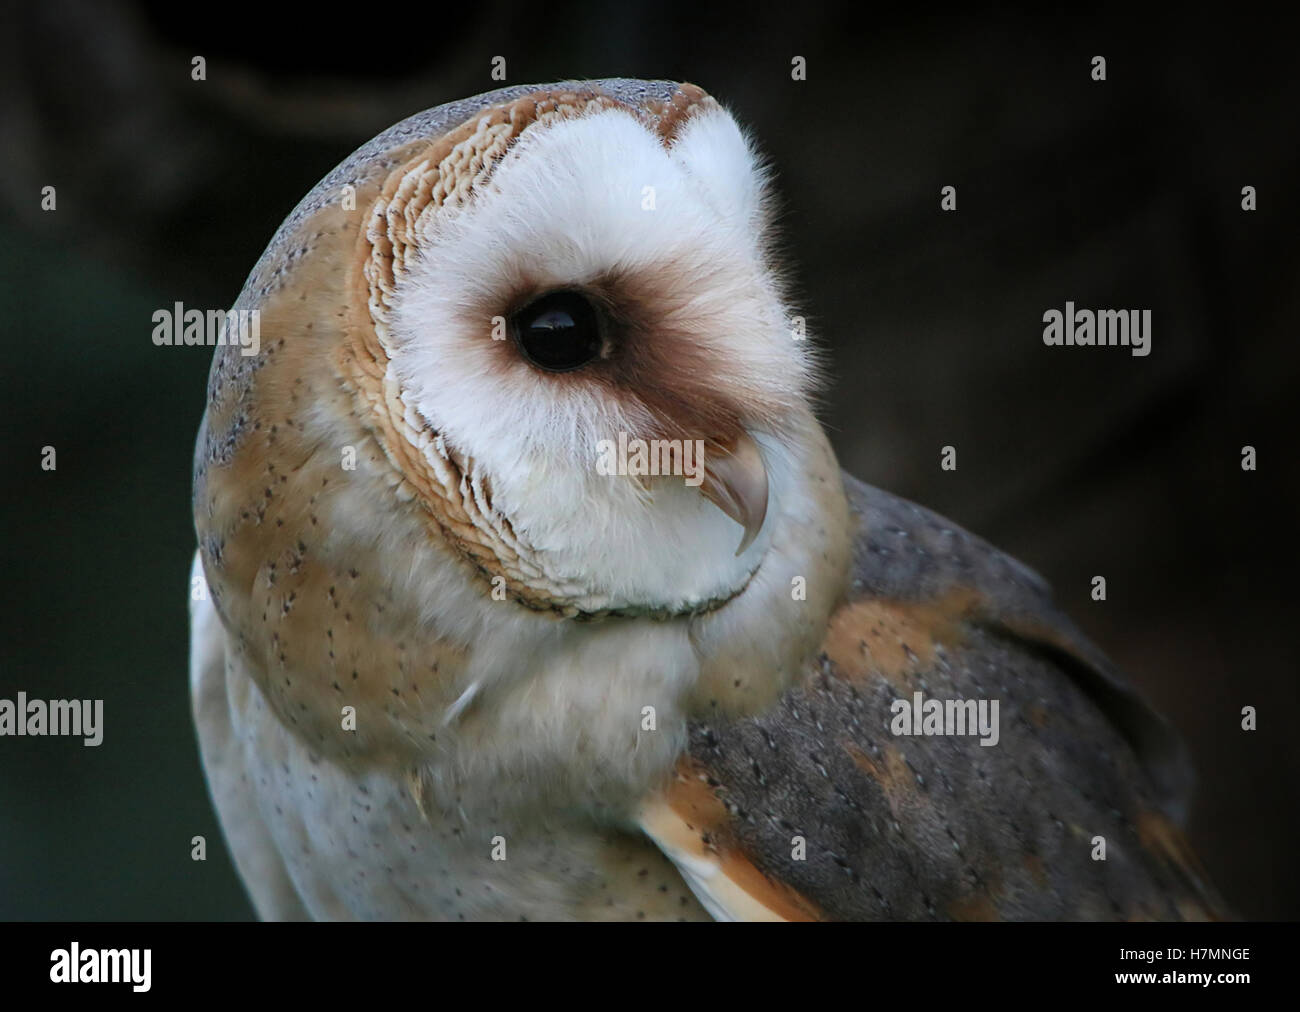 European Barn owl (Tyto alba) in close-up, seen in profile Stock Photo